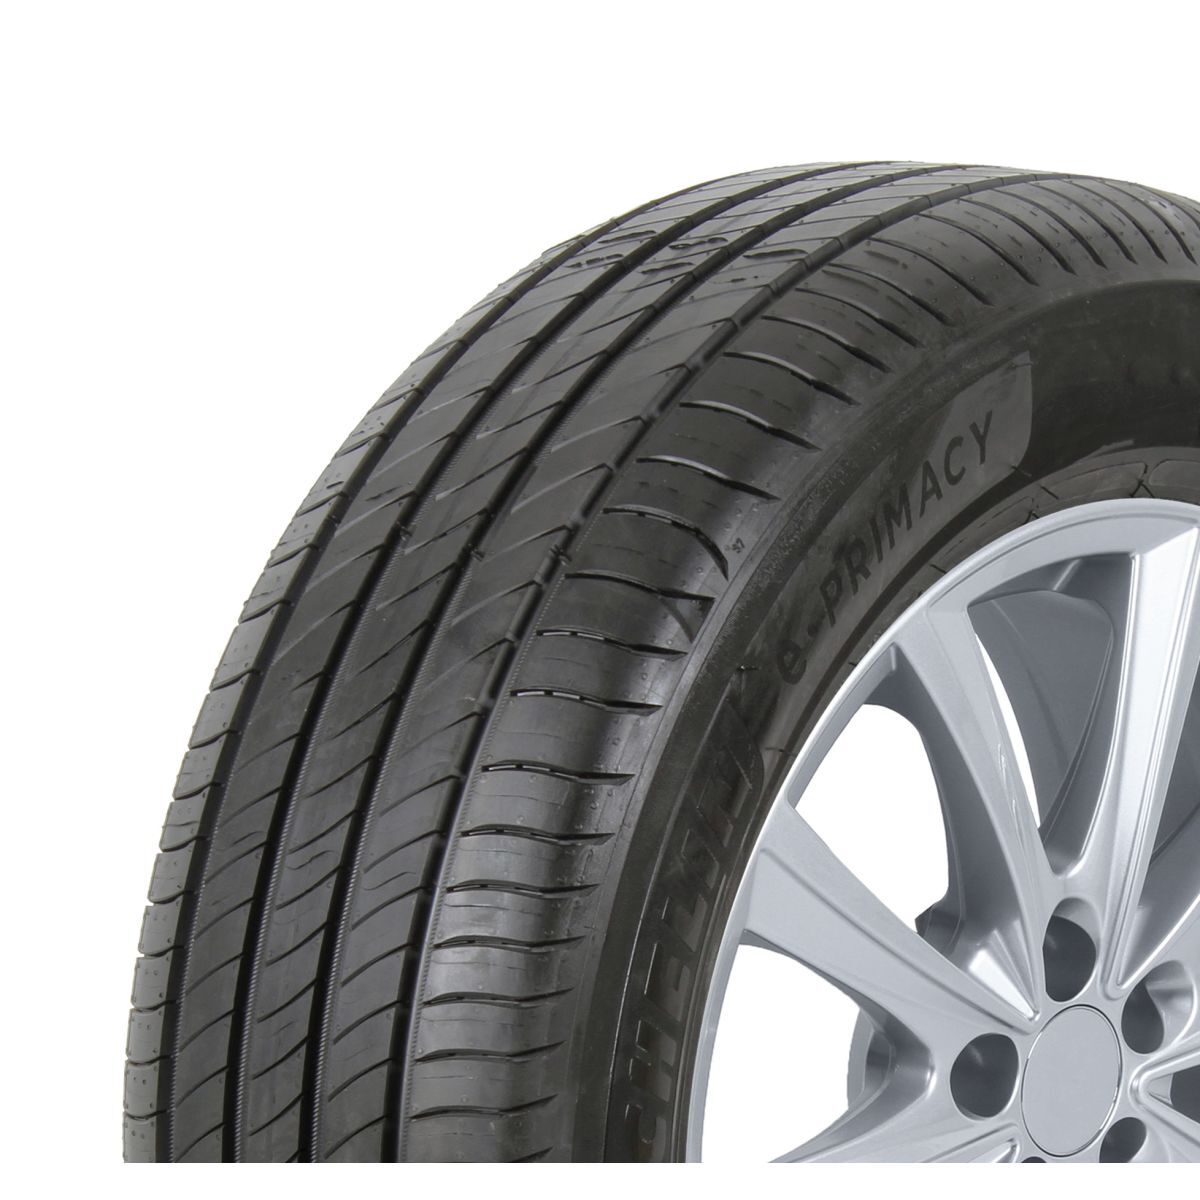 Neumáticos de verano MICHELIN E Primacy 185/65R15 XL 92T